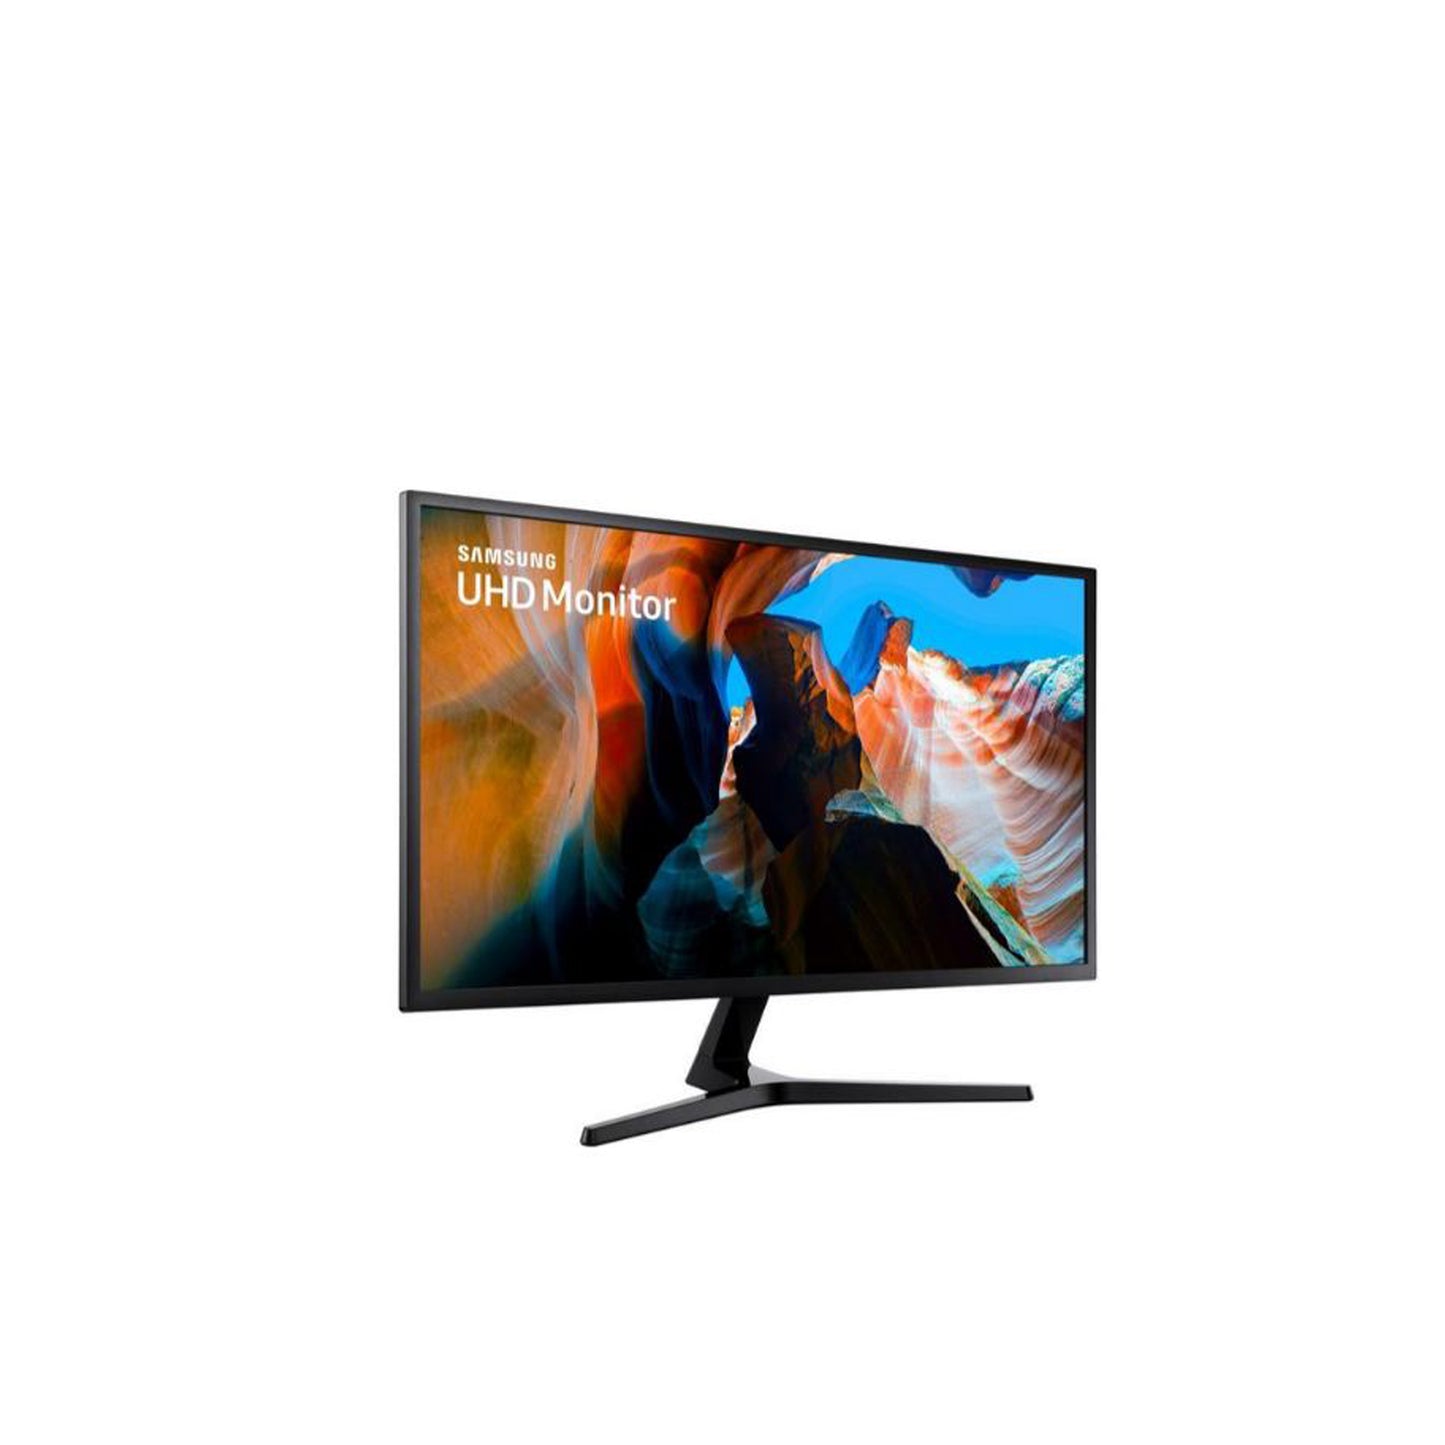 SAMSUNG U32J590 4K Ultra HD 32" LED Monitor - Black